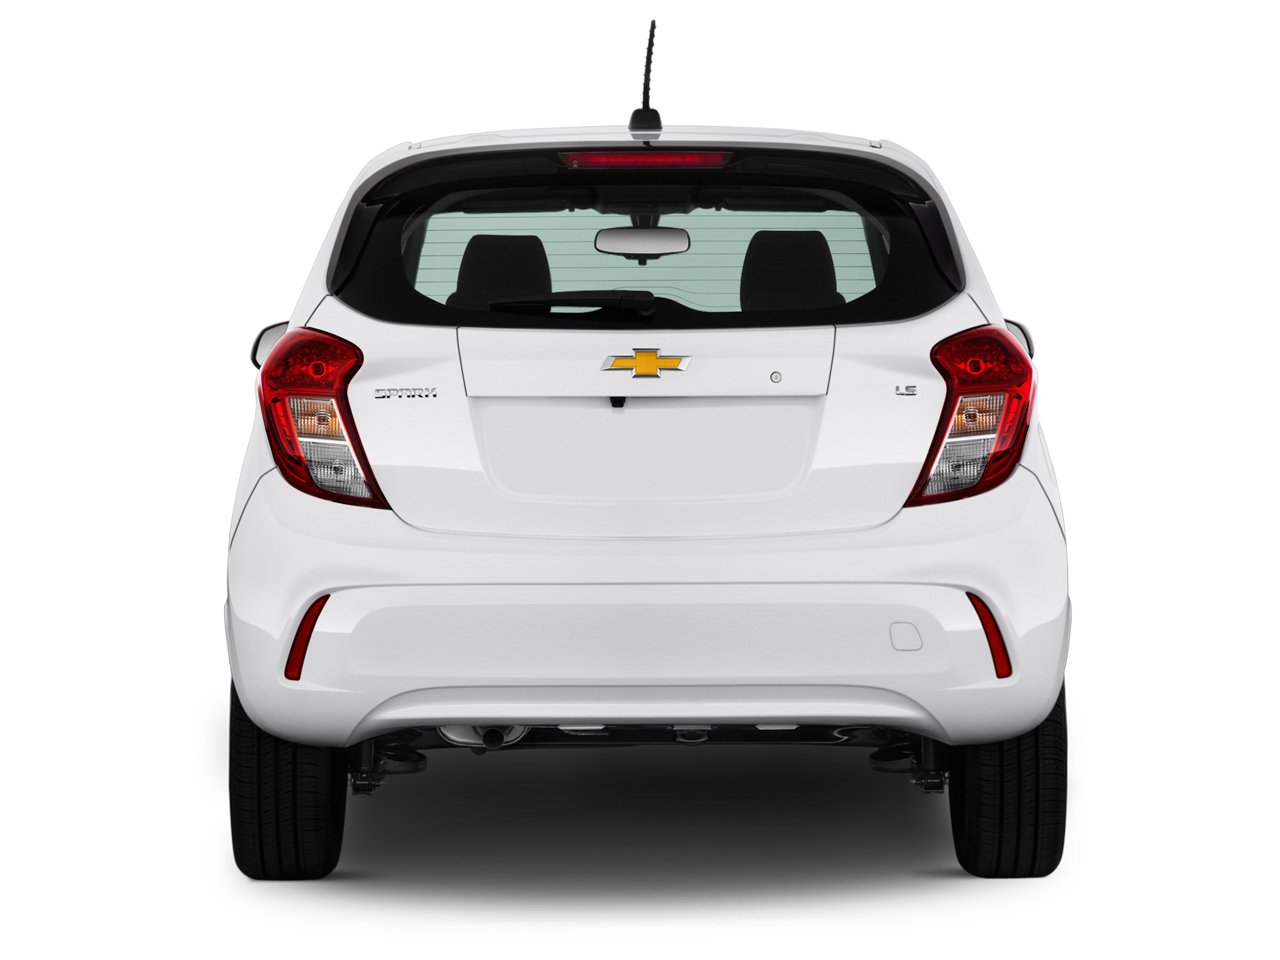 Chevrolet Spark exterior - Rear